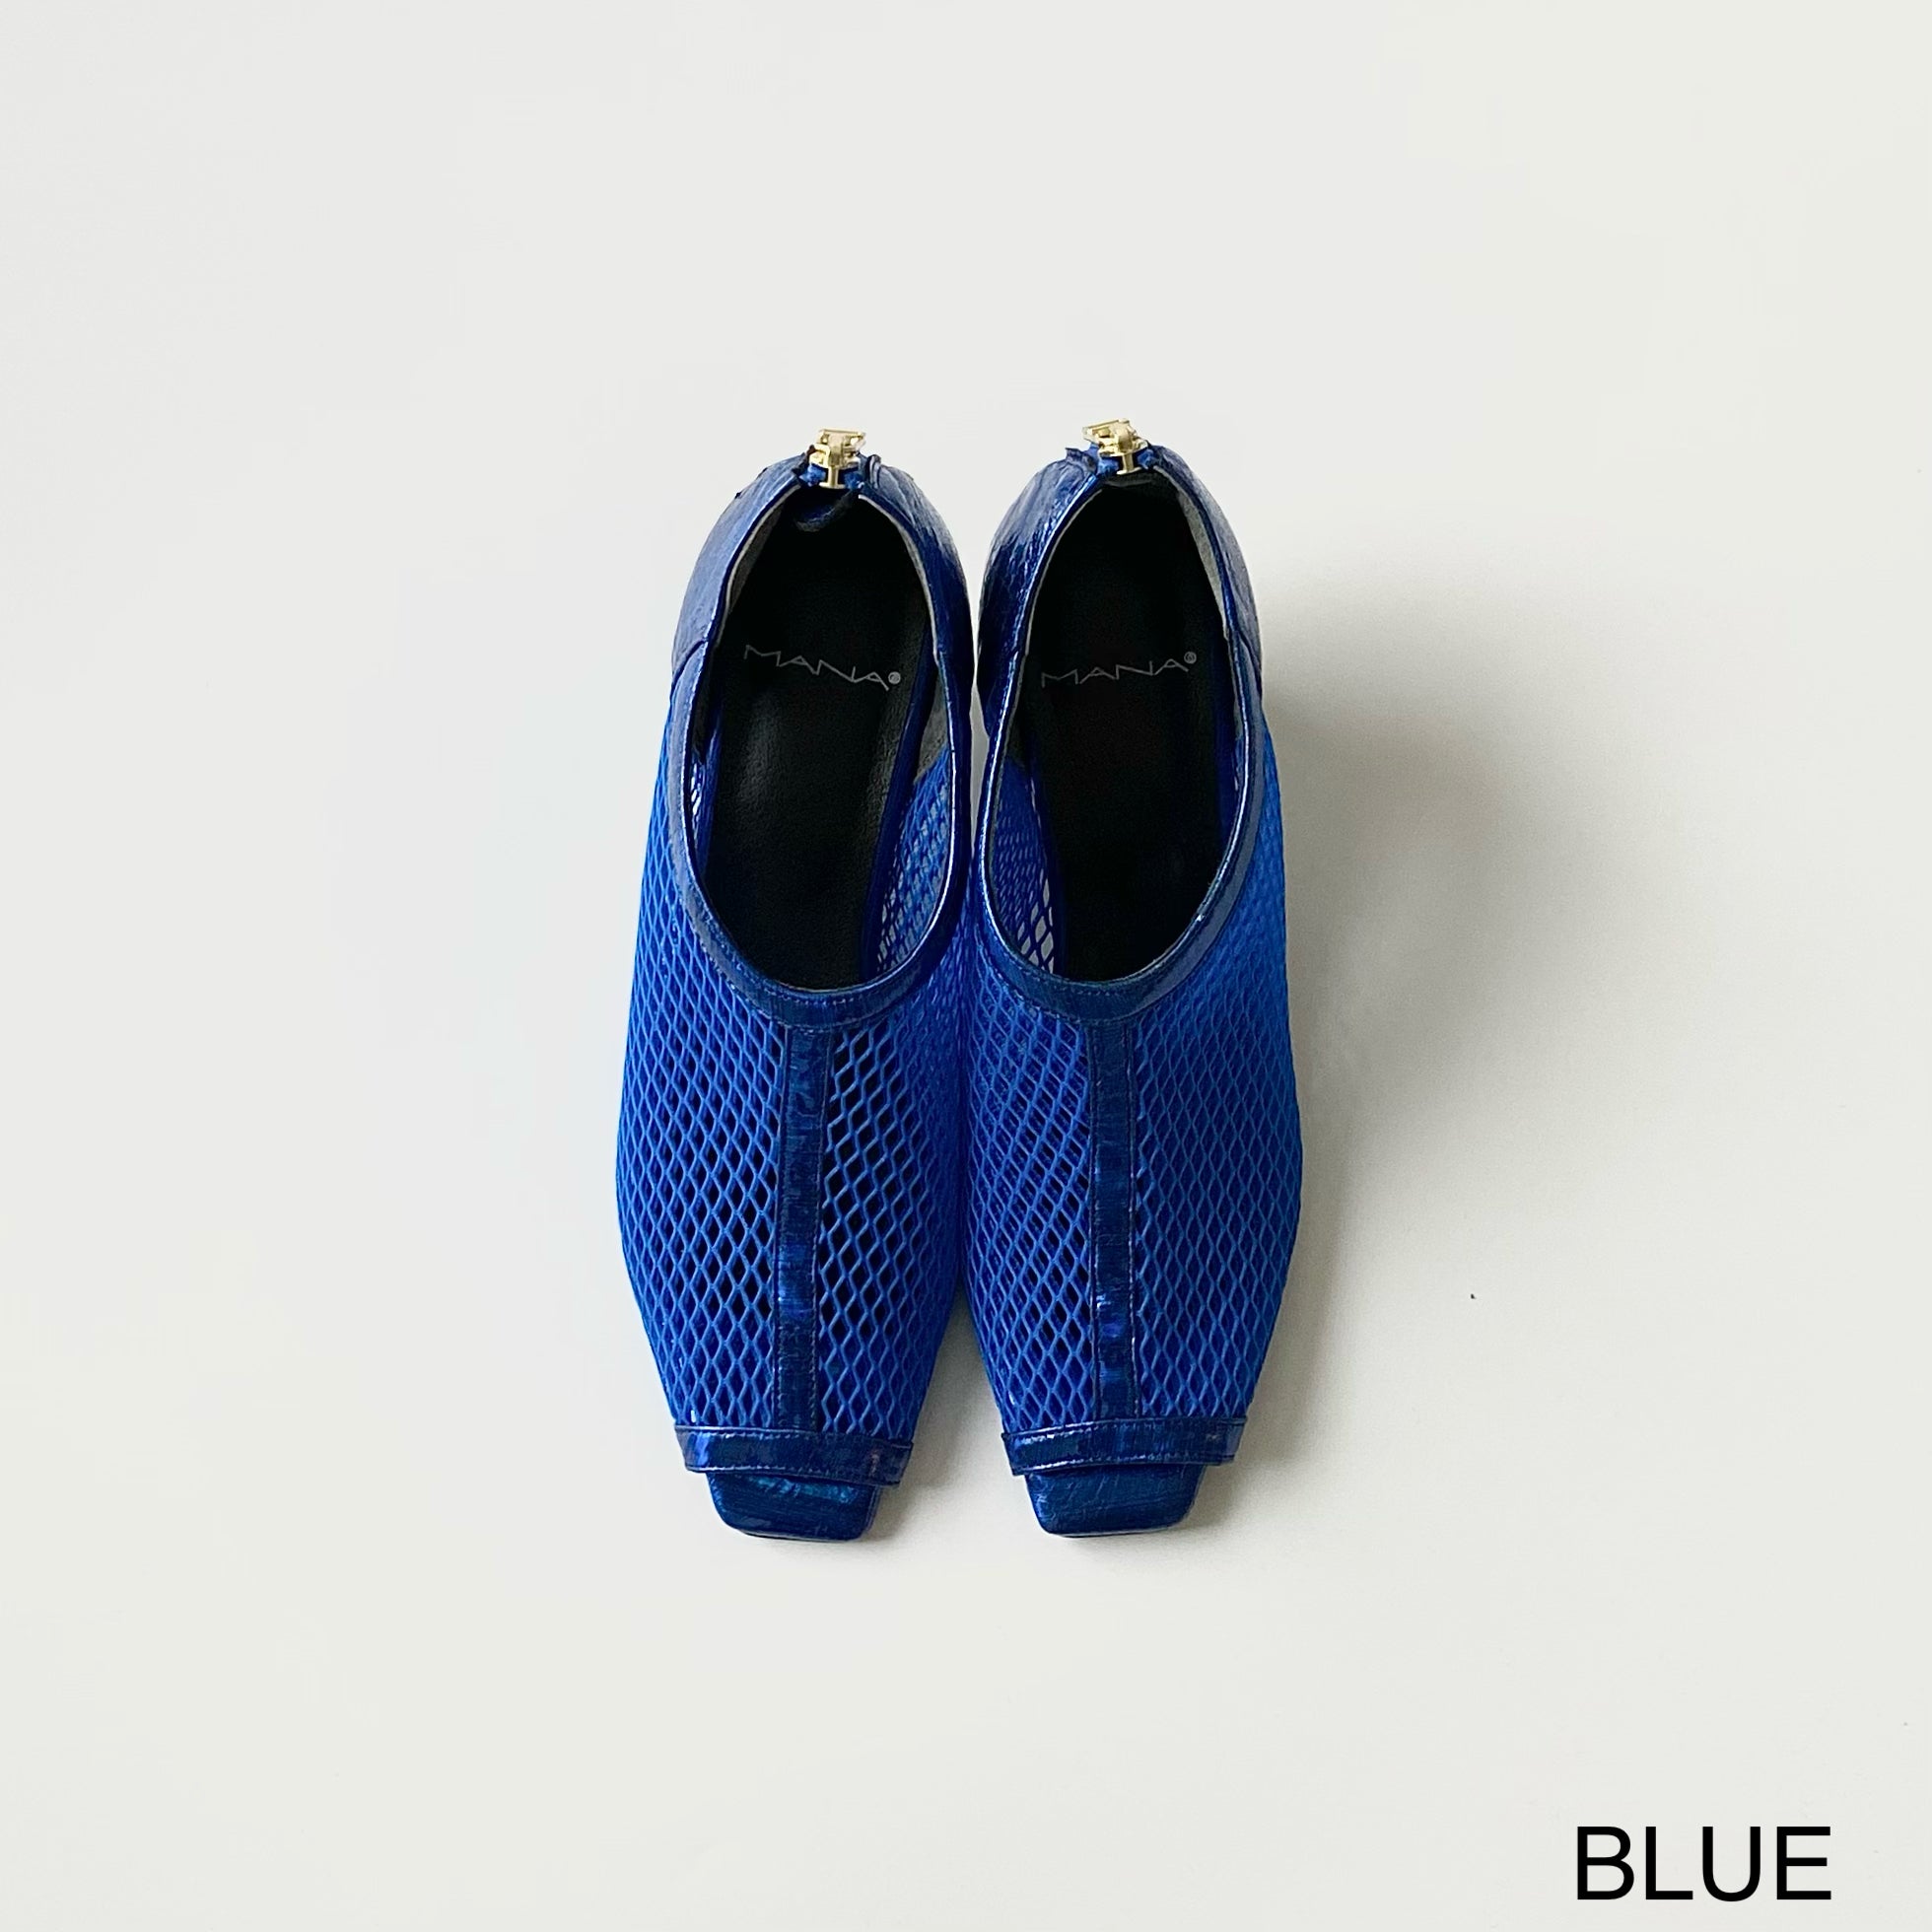 BLUE / 35 (22.5cm)